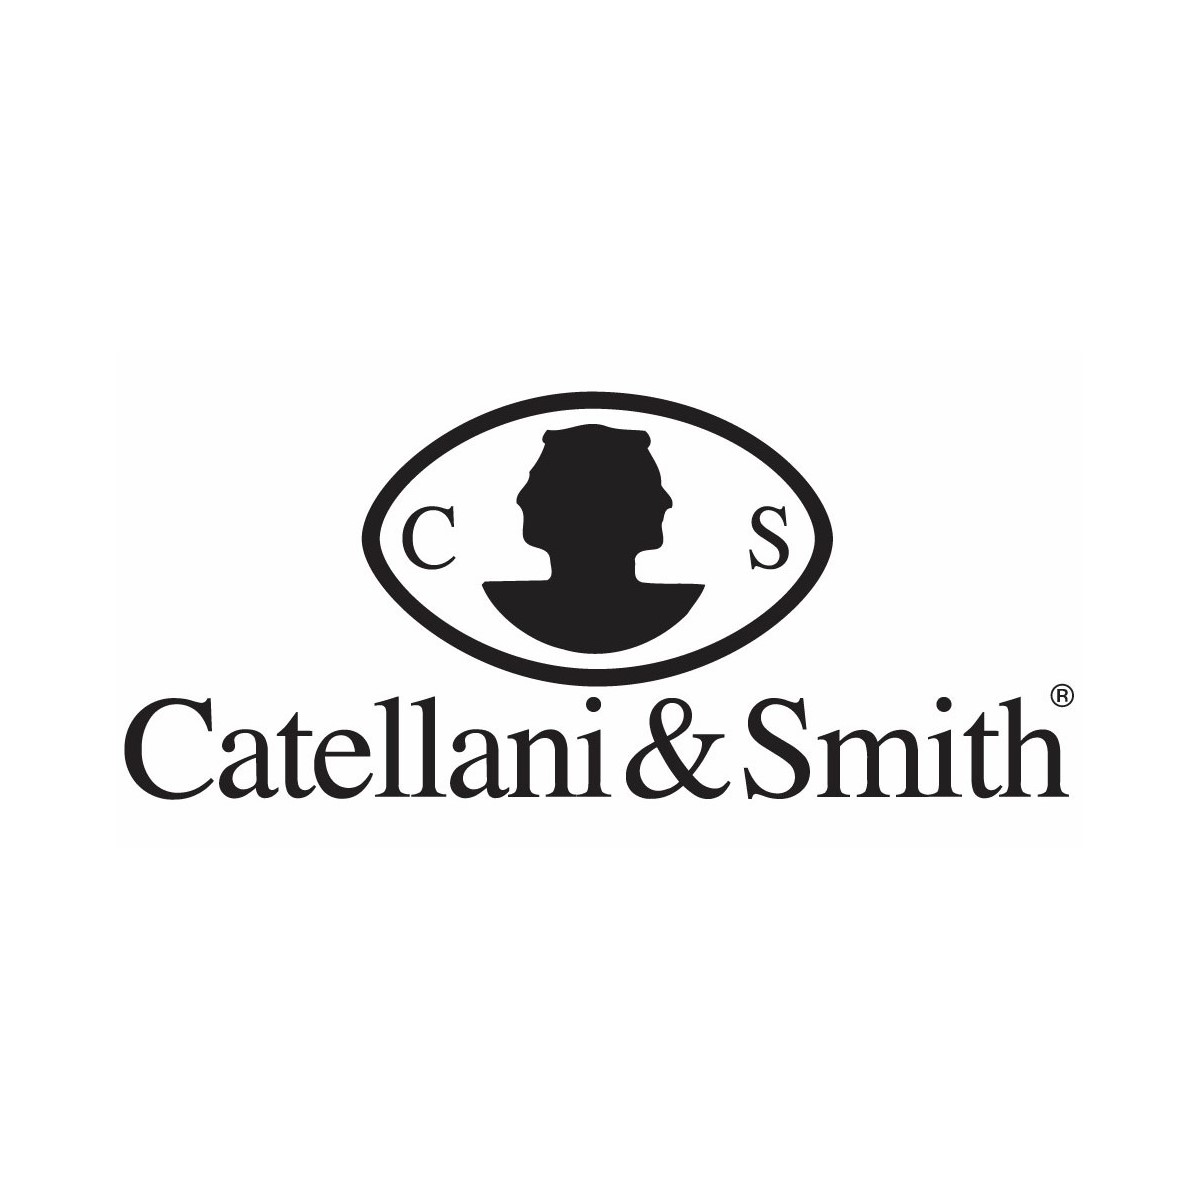 Catellani Smith